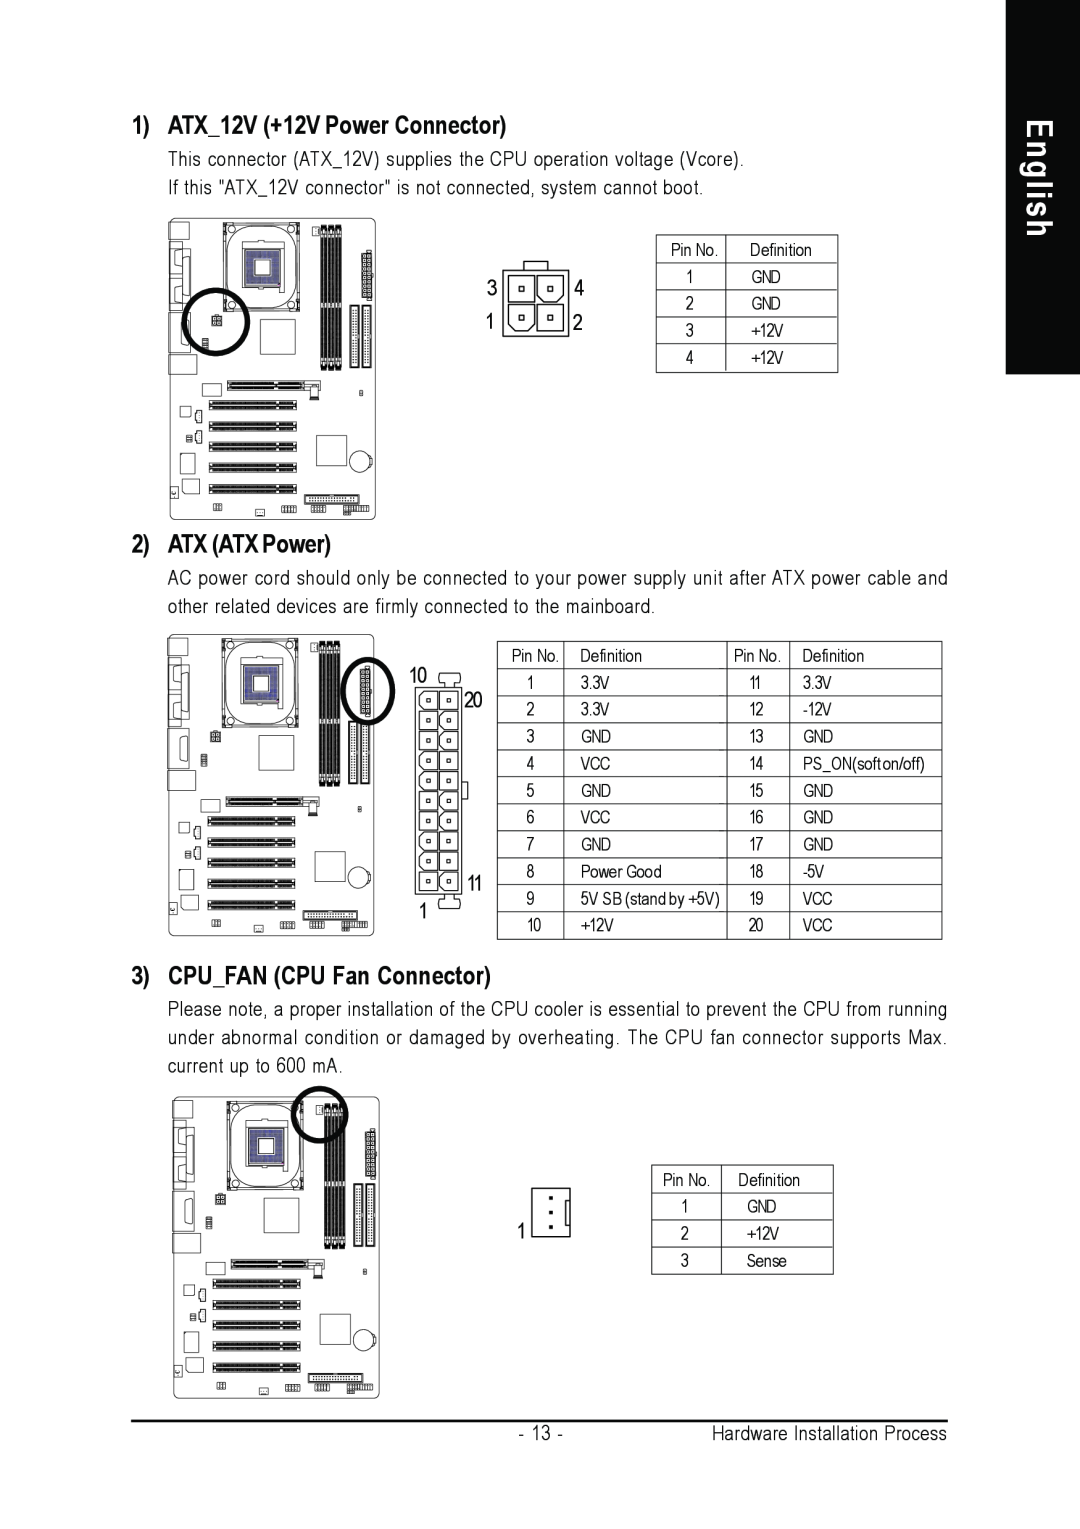 Gigabyte 8S648FX-RZ-C user manual English, 1 ATX12V +12V Power Connector, ATX ATX Power, CPUFAN CPU Fan Connector 